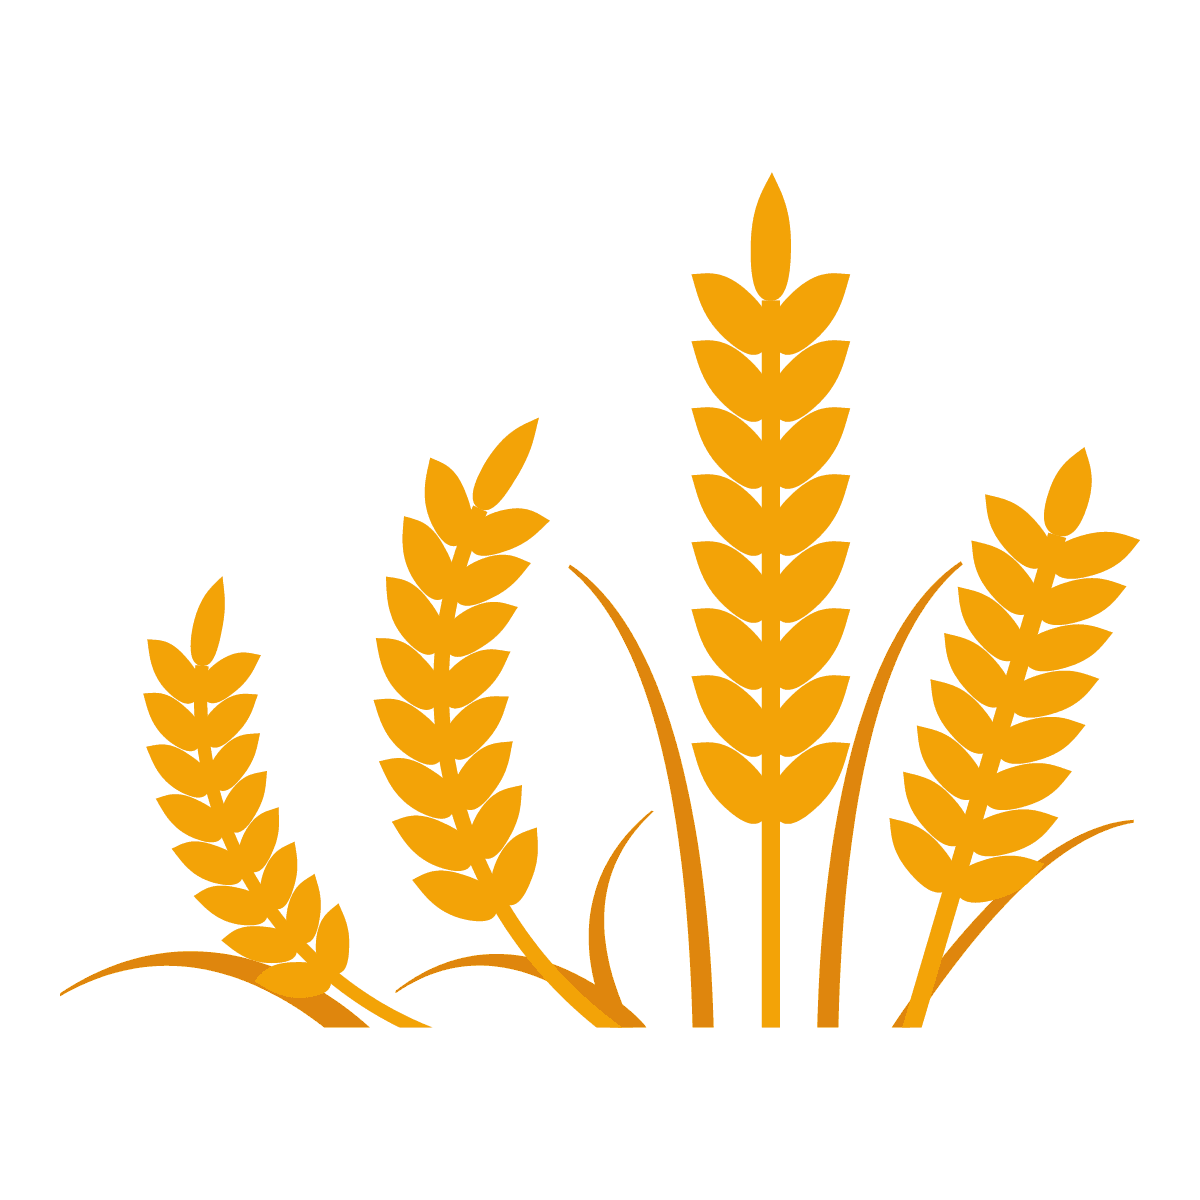 simple golden wheat illustrations elements